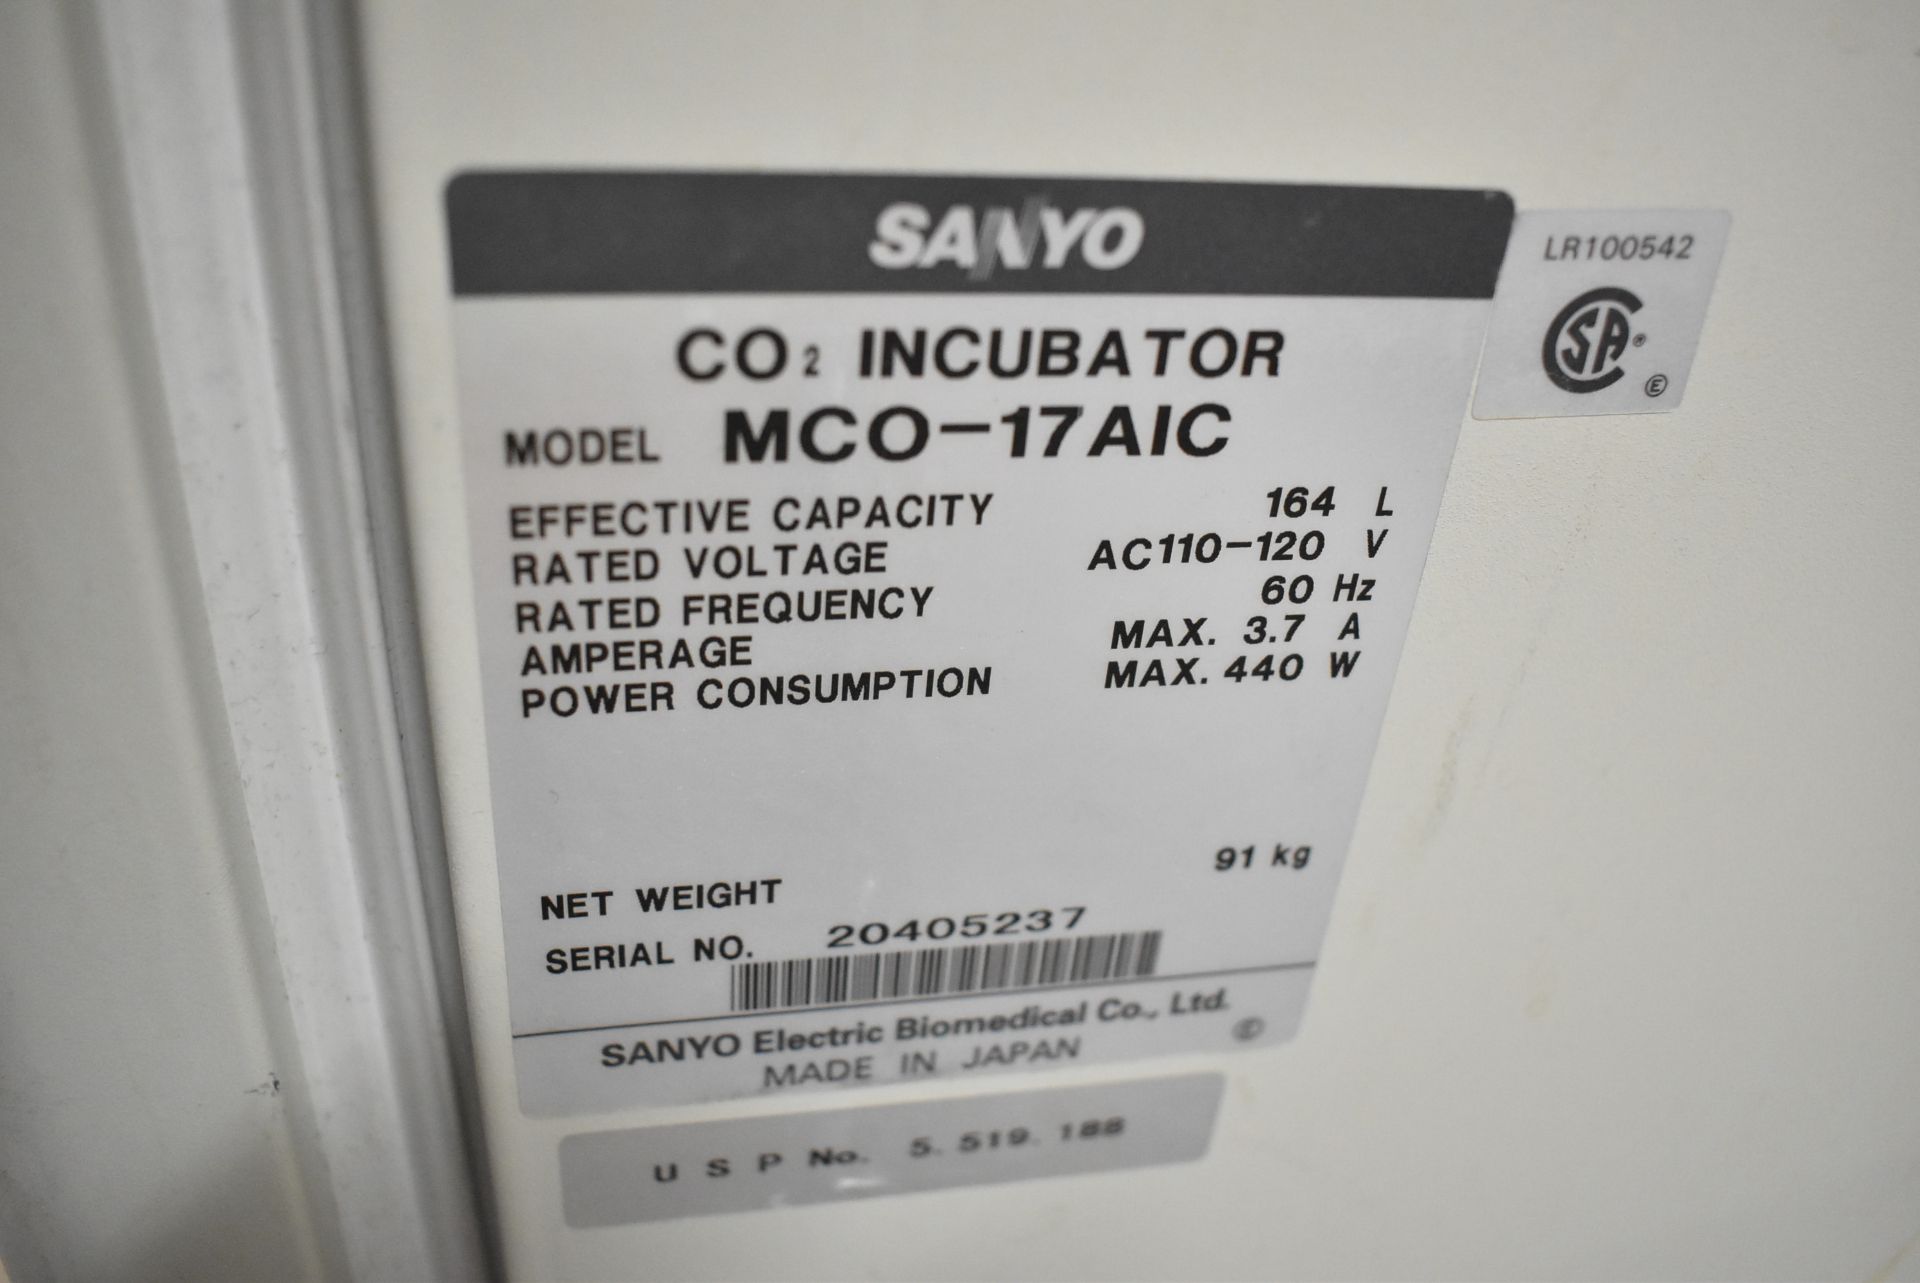 SANYO MCO-17AIC CO2 INCUBATOR WITH +5sC TO +50sC TEMPERATURE RANGE, 19"X20"X26"H INTERIOR - Image 4 of 5